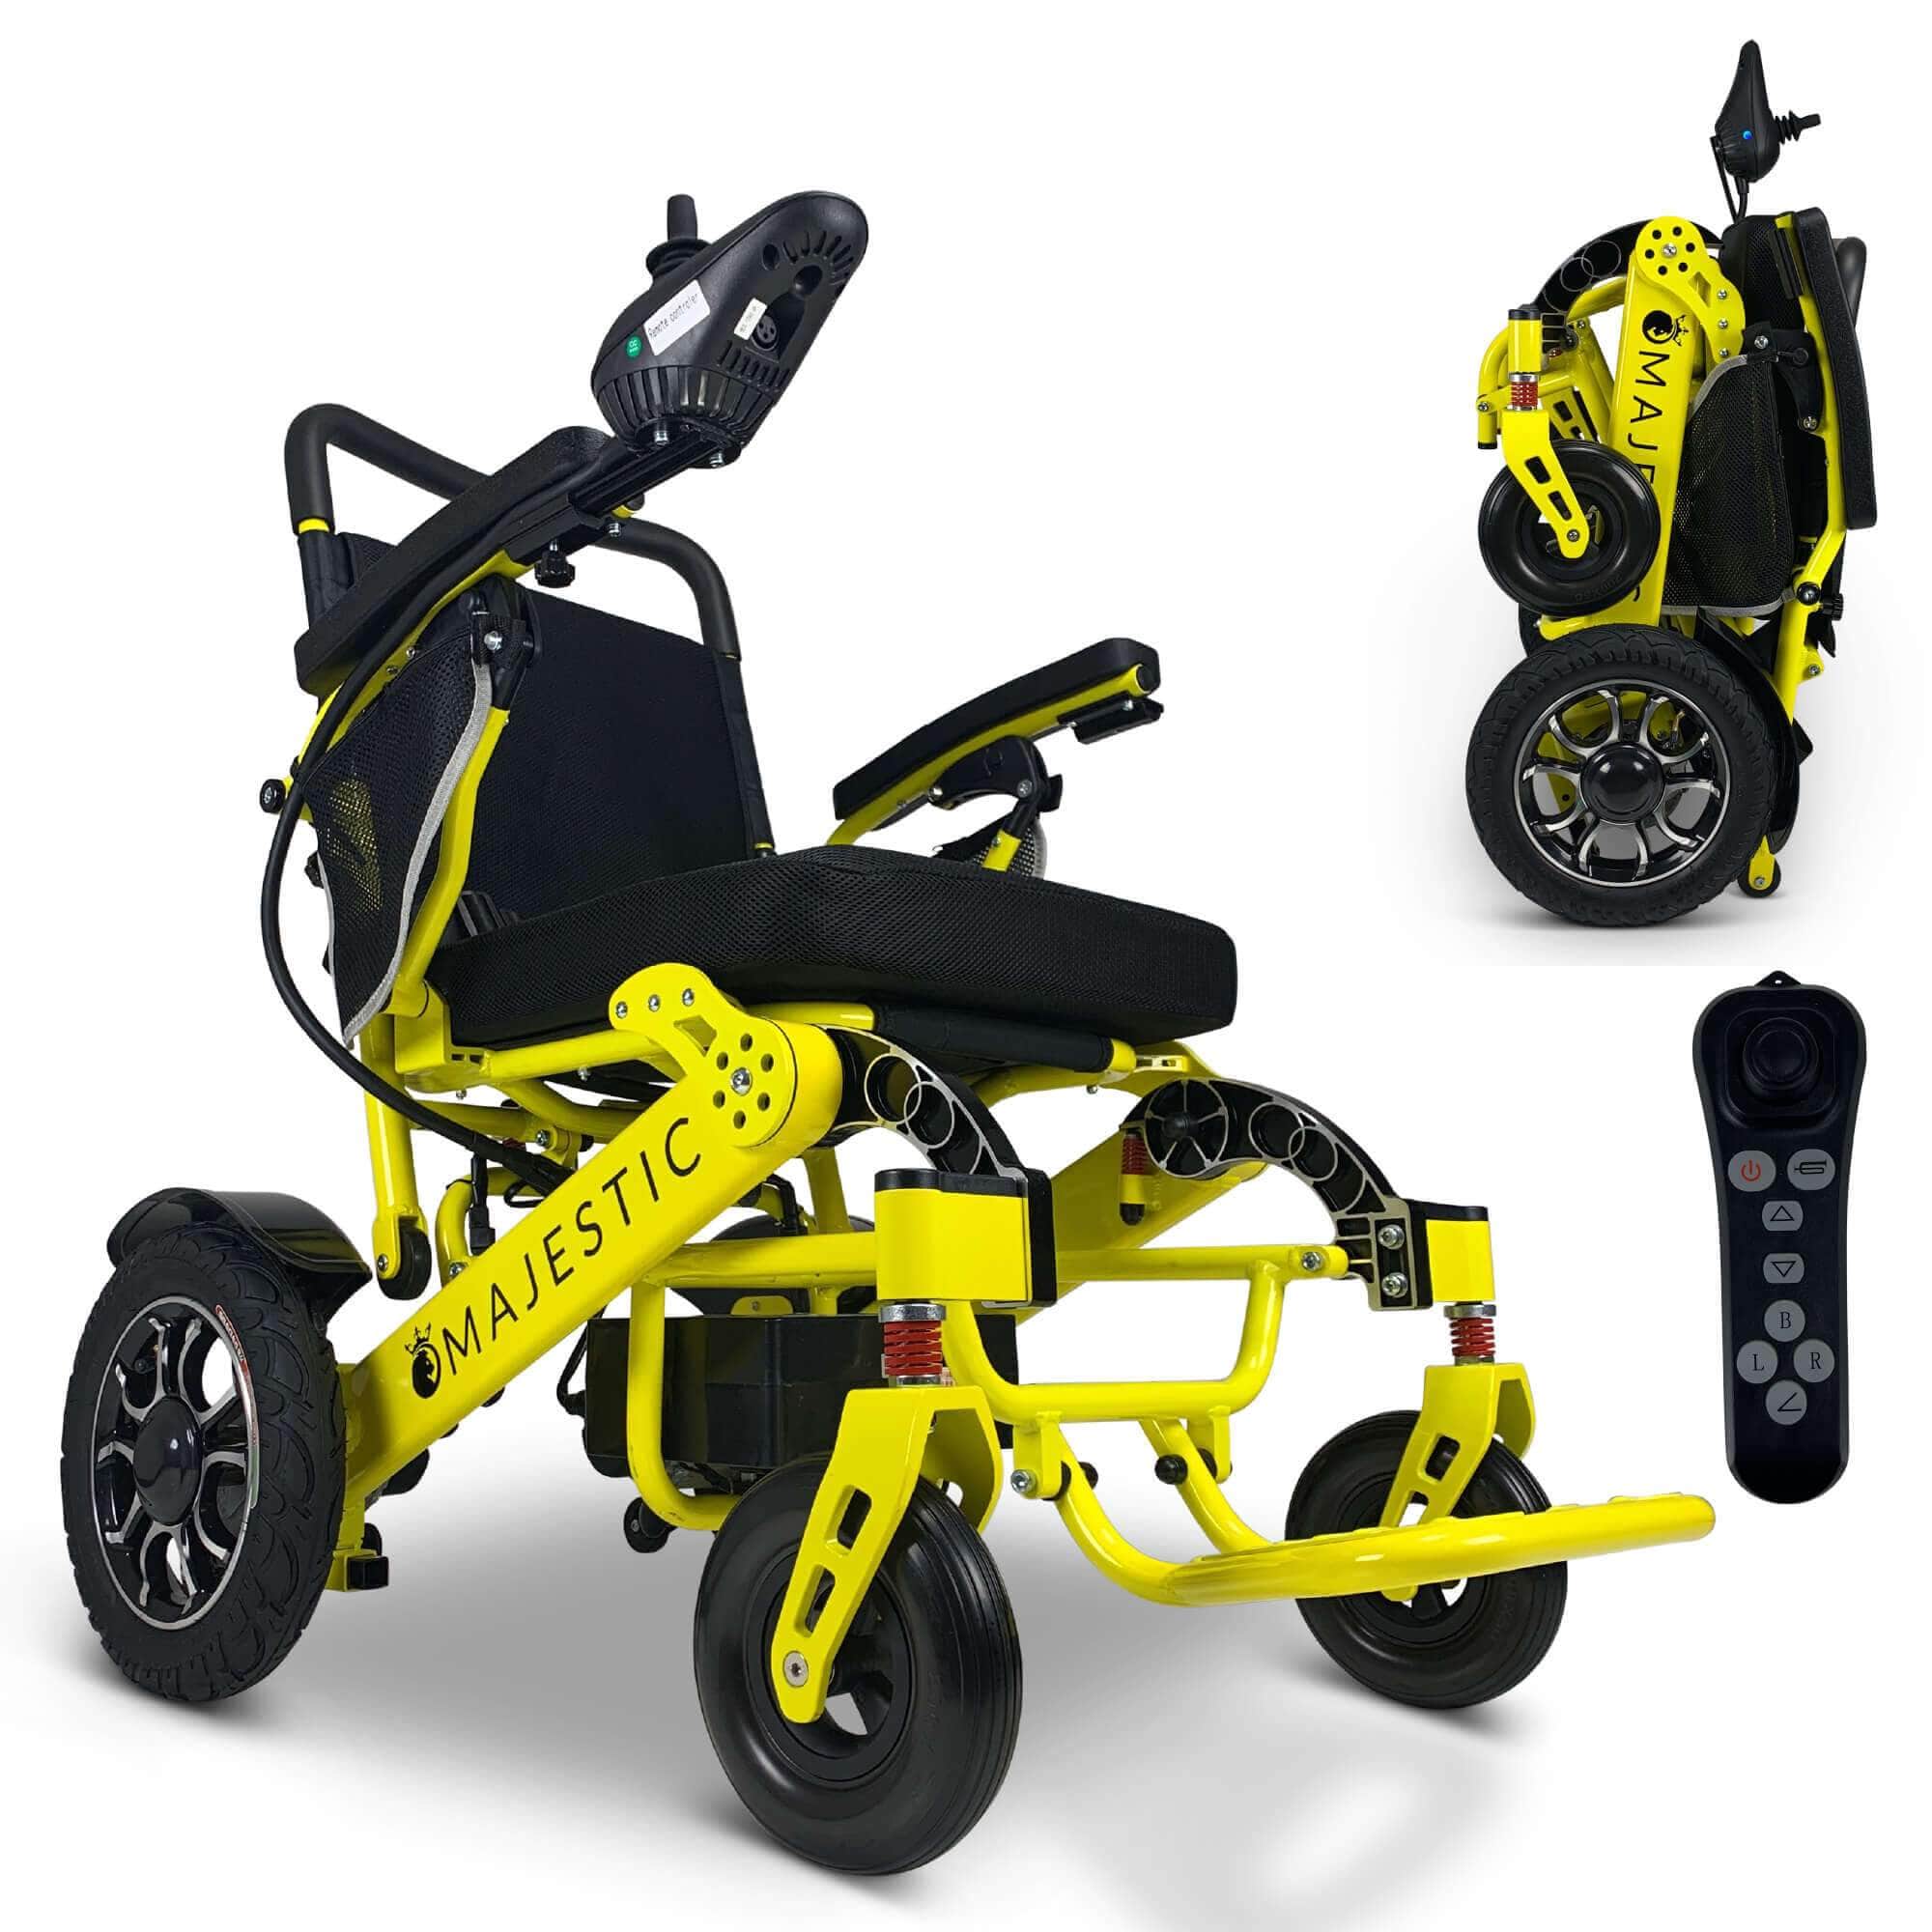 ComfyGo Majestic IQ-7000 12Ah 250W Auto Folding Electric Wheelchair